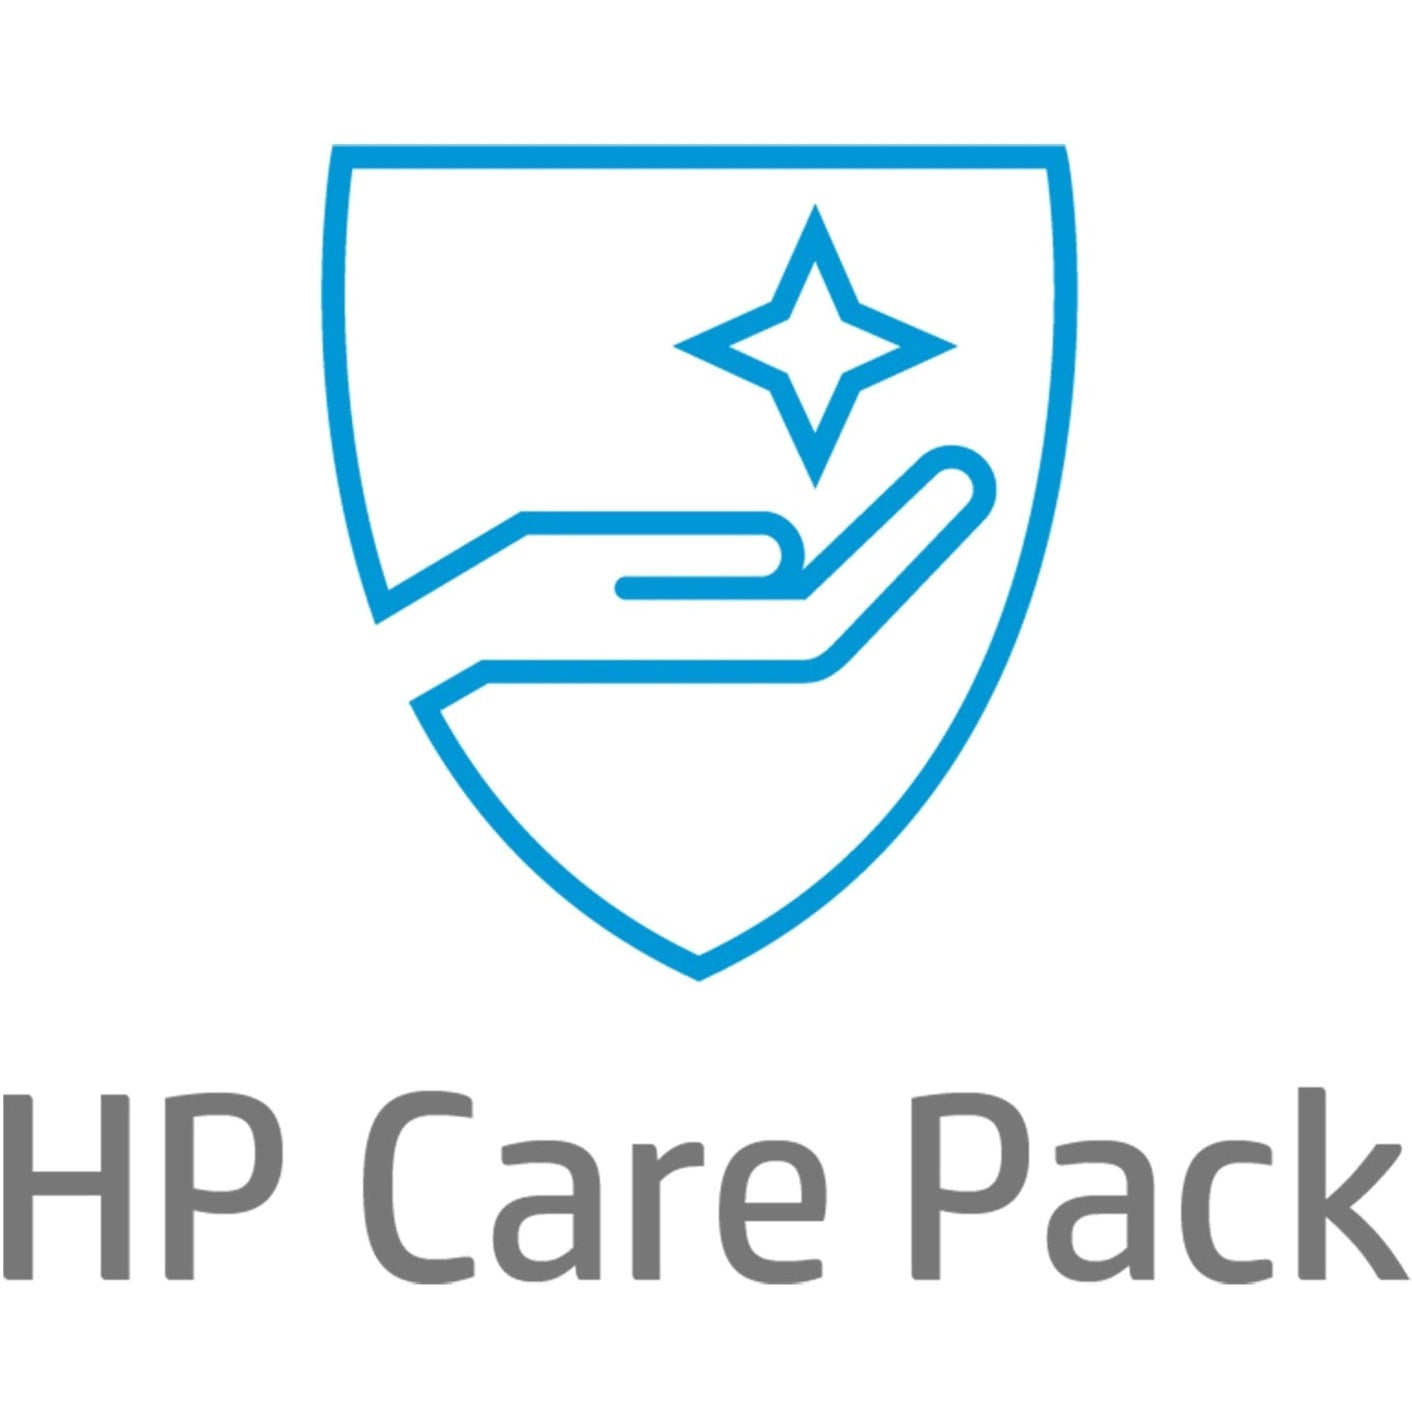 HP Care Pack Hardware Support - 1 Year - Service (U8C73PE)